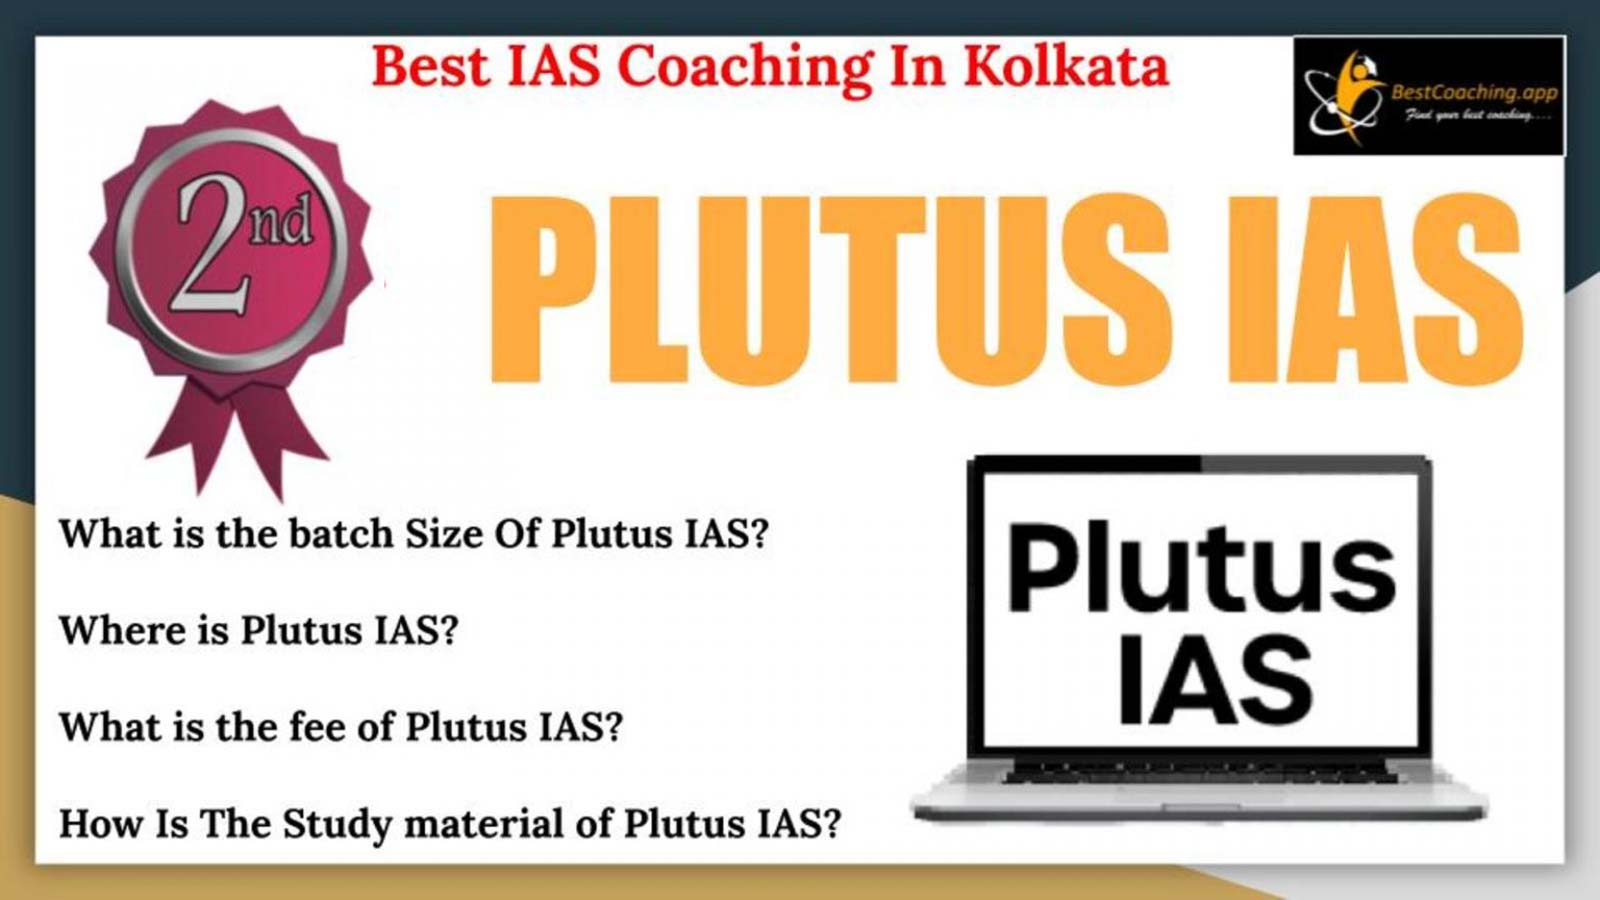 2nd Best IAS Coaching in Kolkata